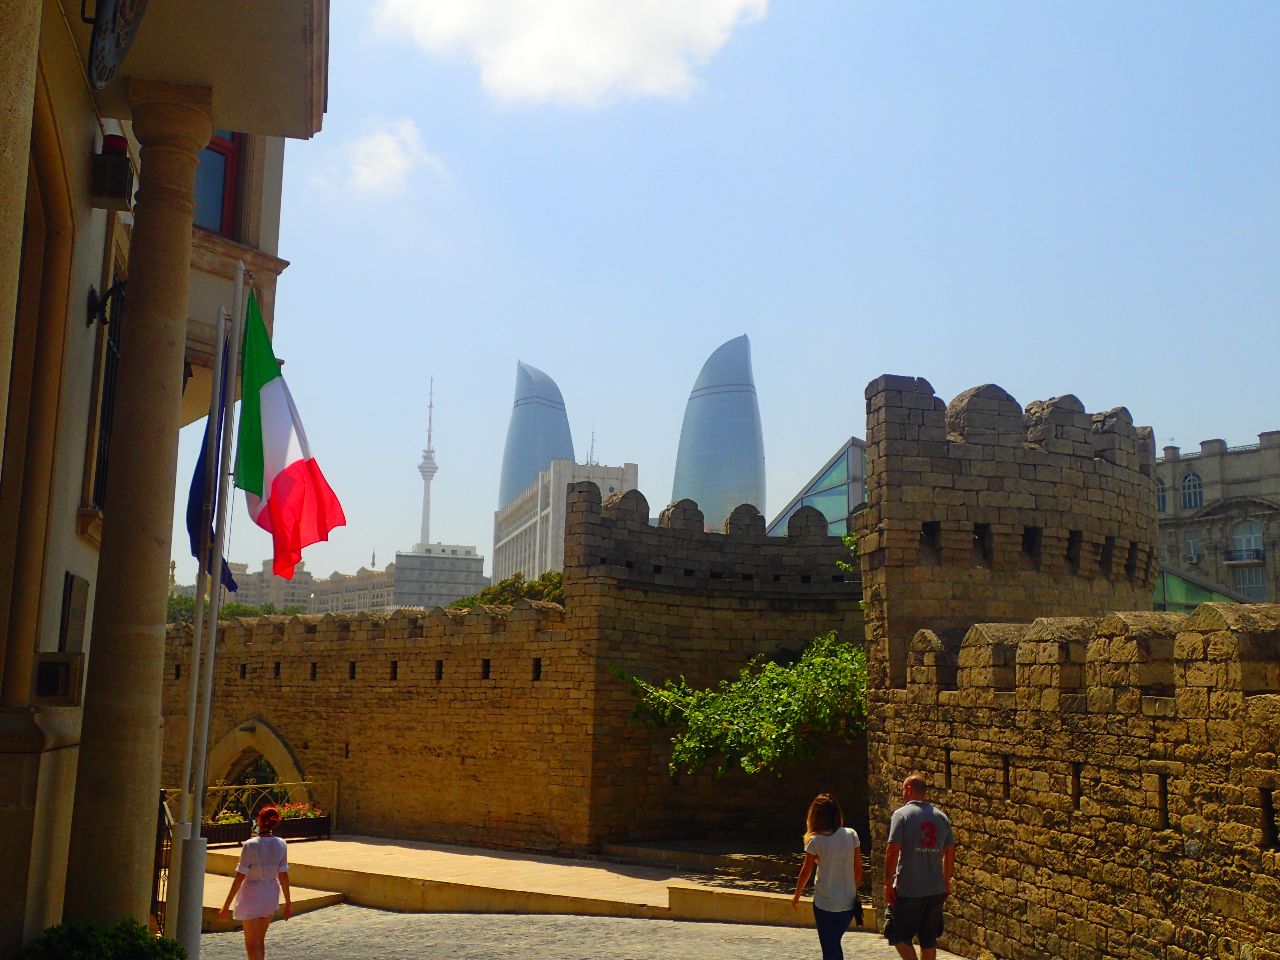 Баку город ветров и пламени. Жемчужина Каспия. После бала... Баку, Азербайджан